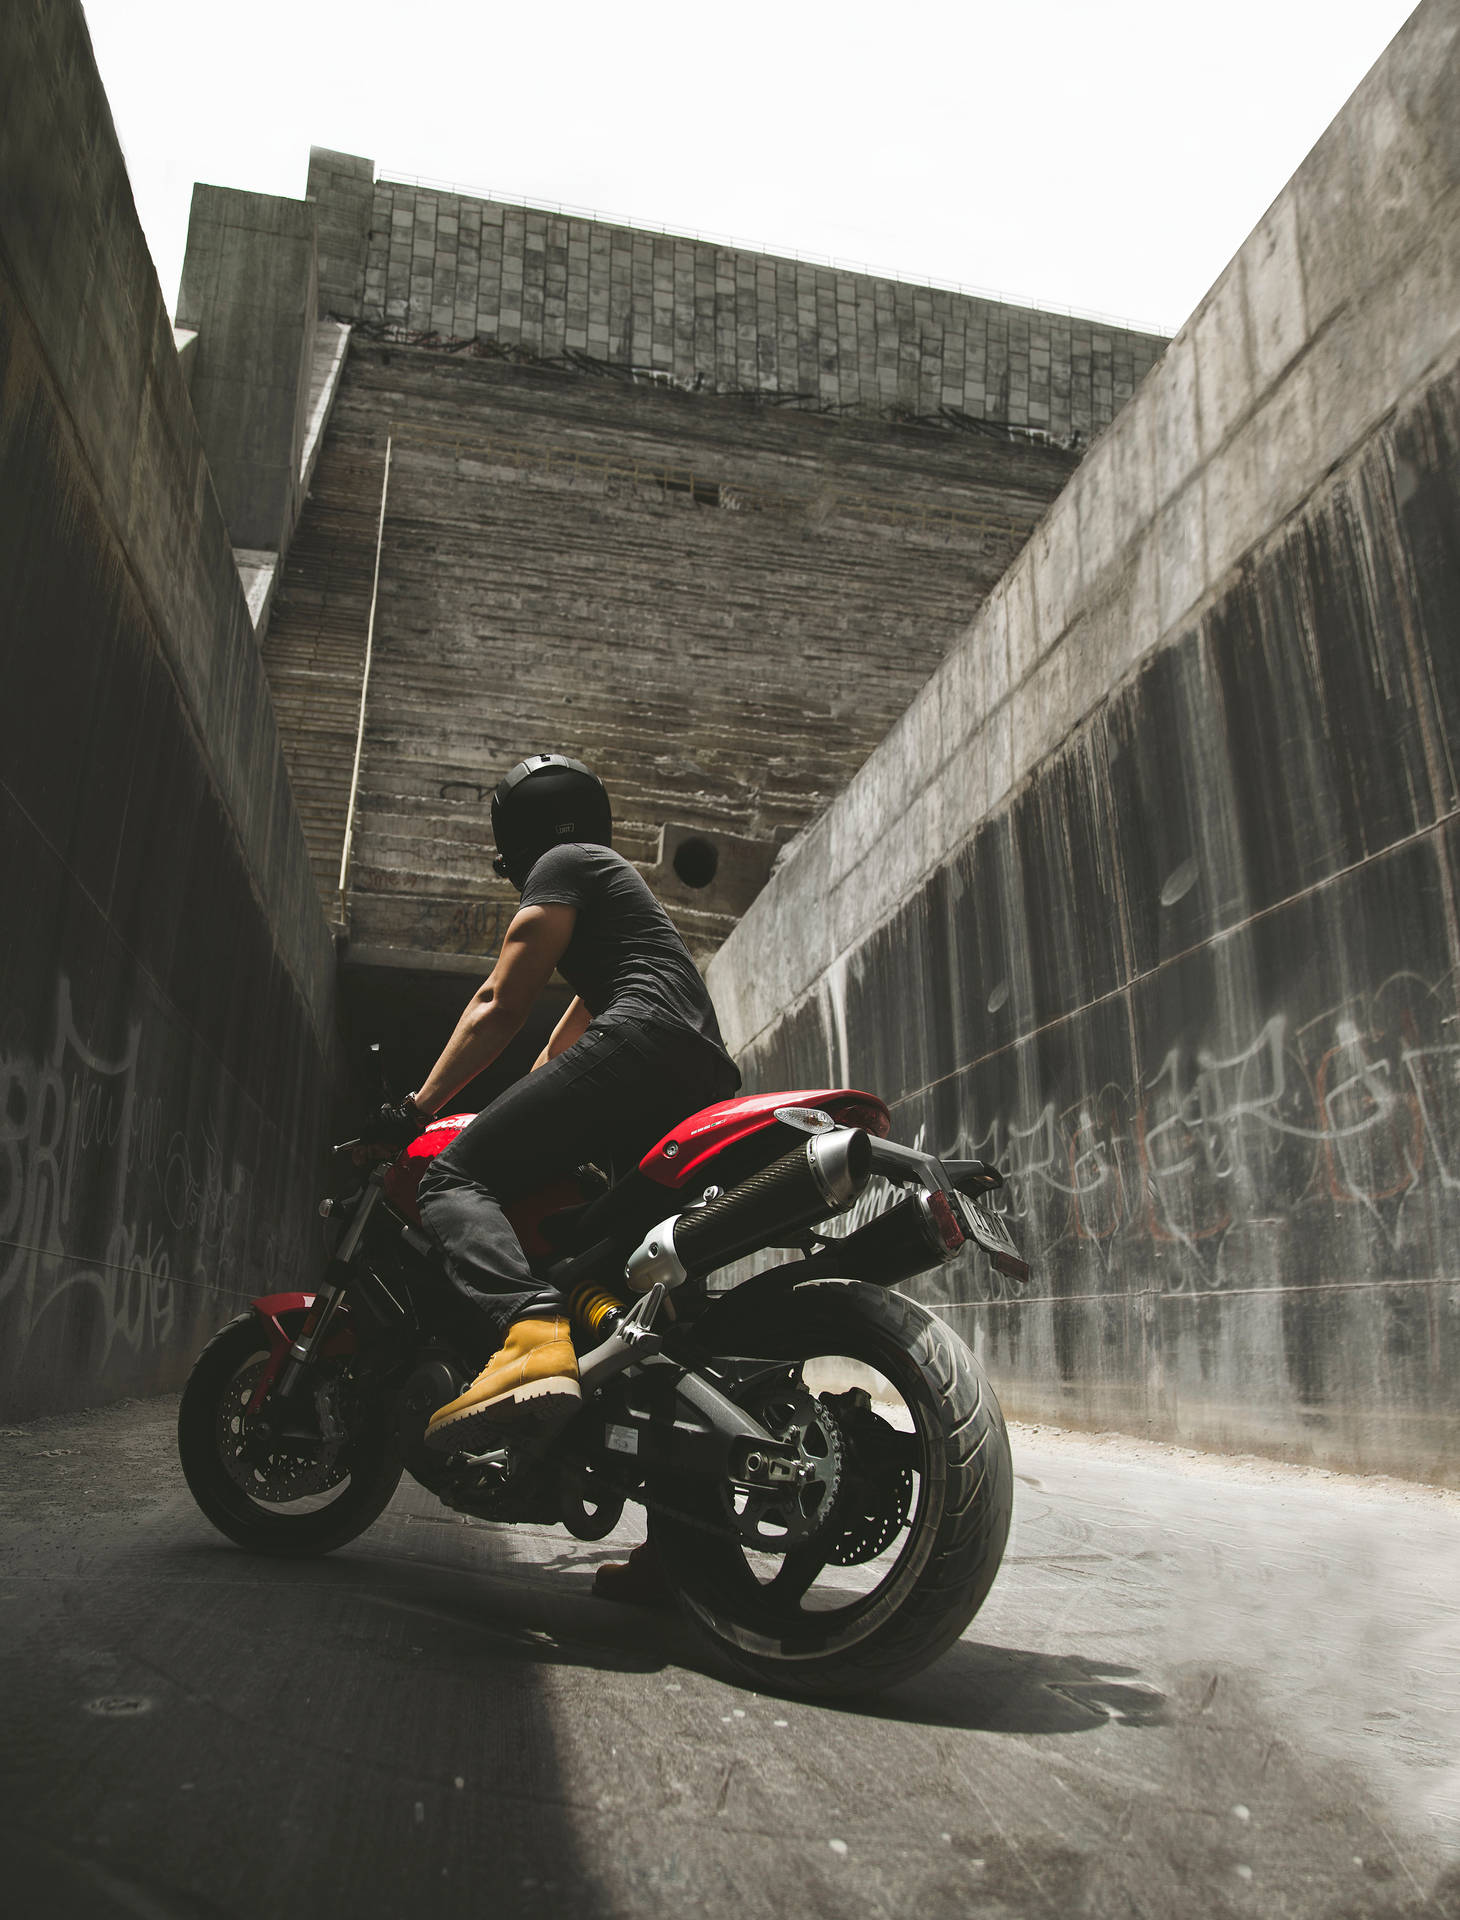 Motorcyclist Posing Between Concrete Walls